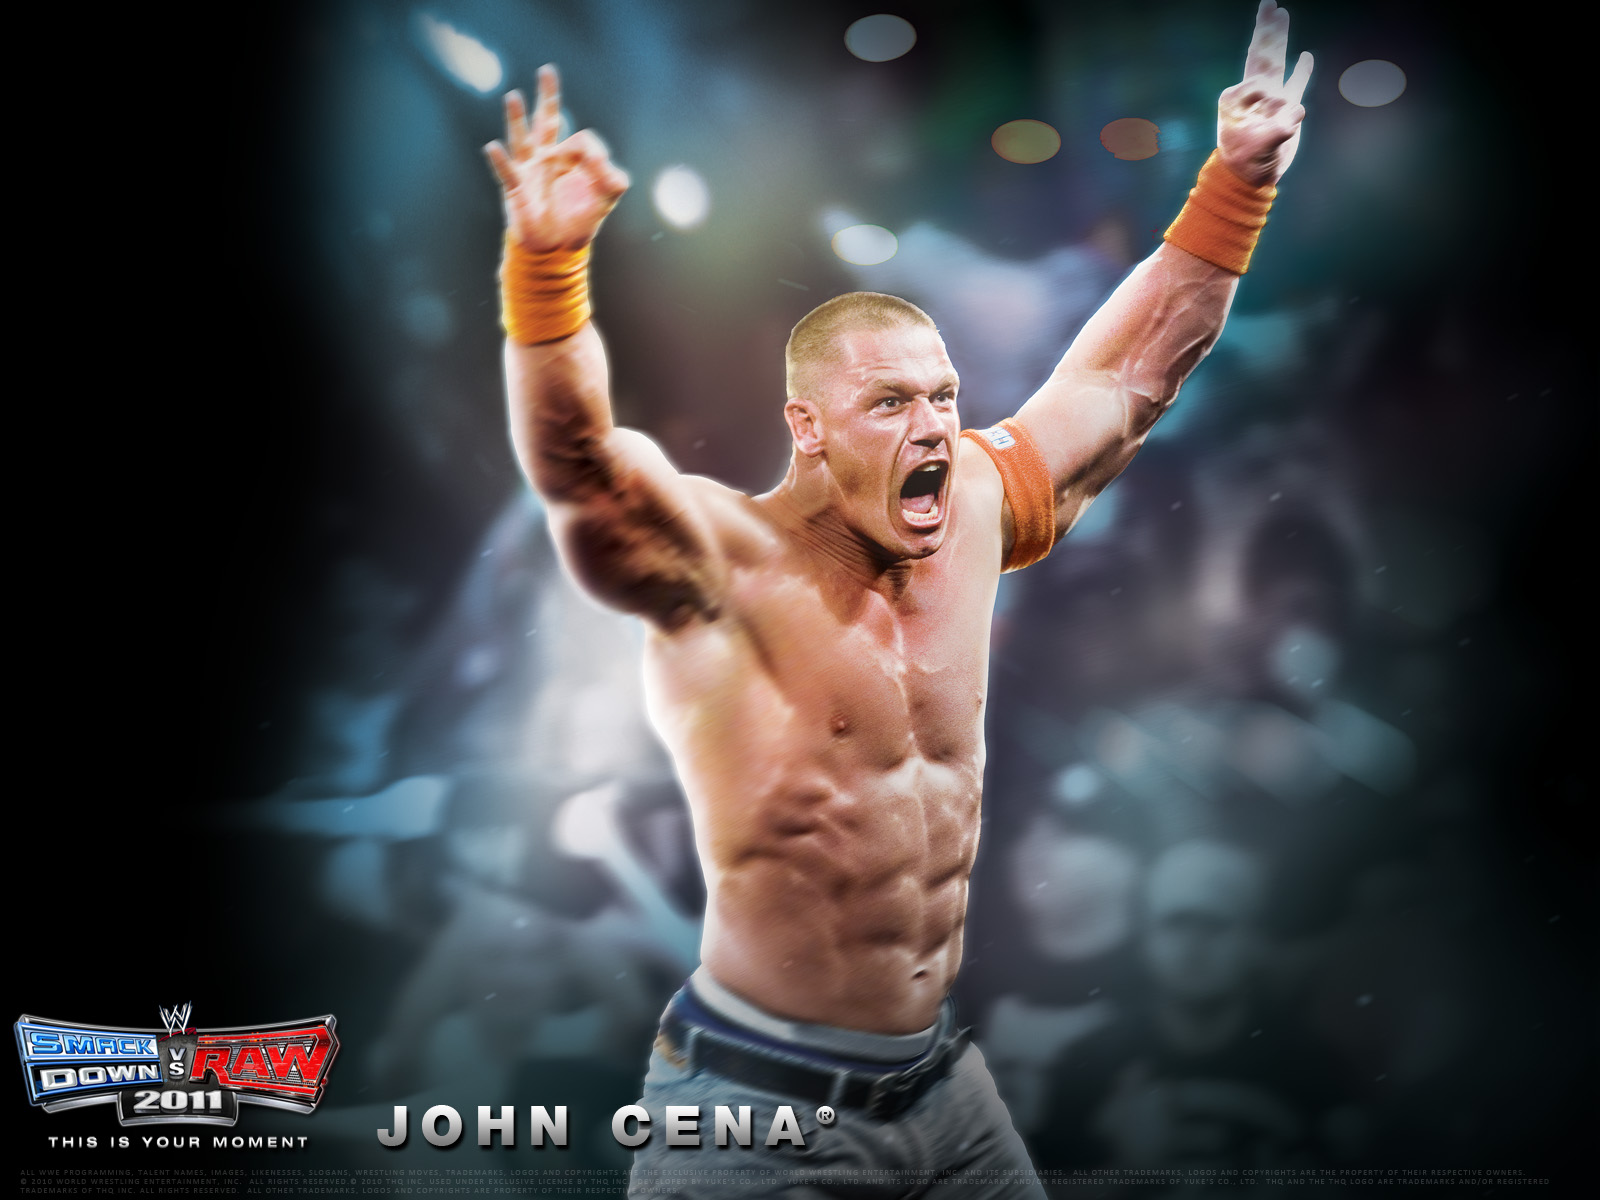 Search Results wallpaper john cena - WWE on Wrestling Media